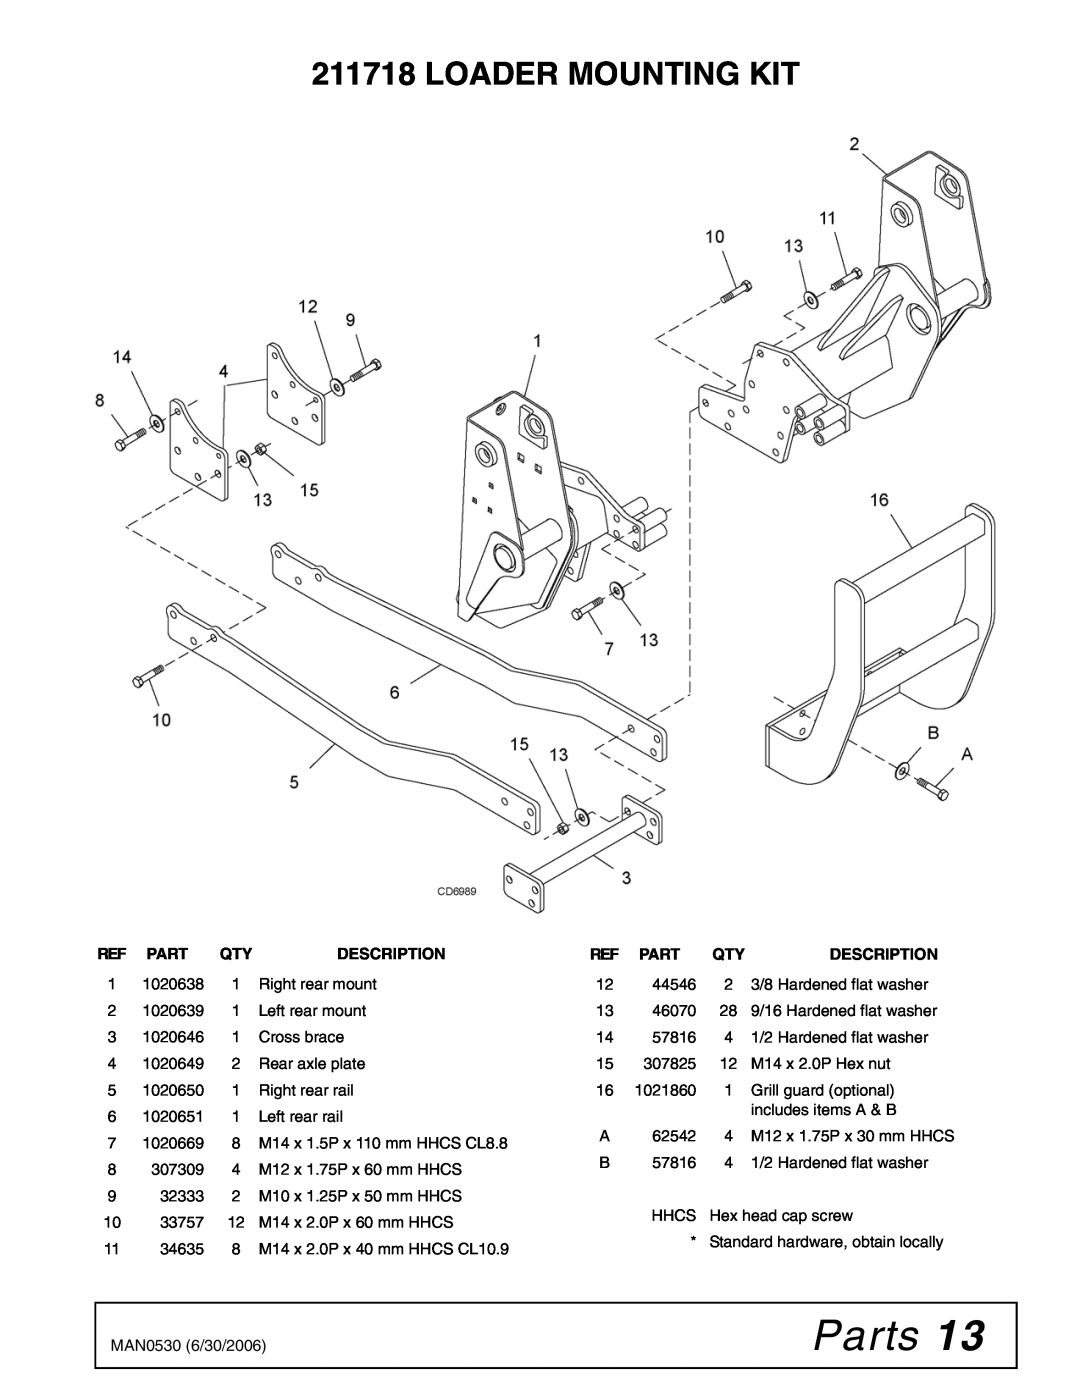 Woods Equipment 211718 installation manual Parts, Loader Mounting Kit, Description 